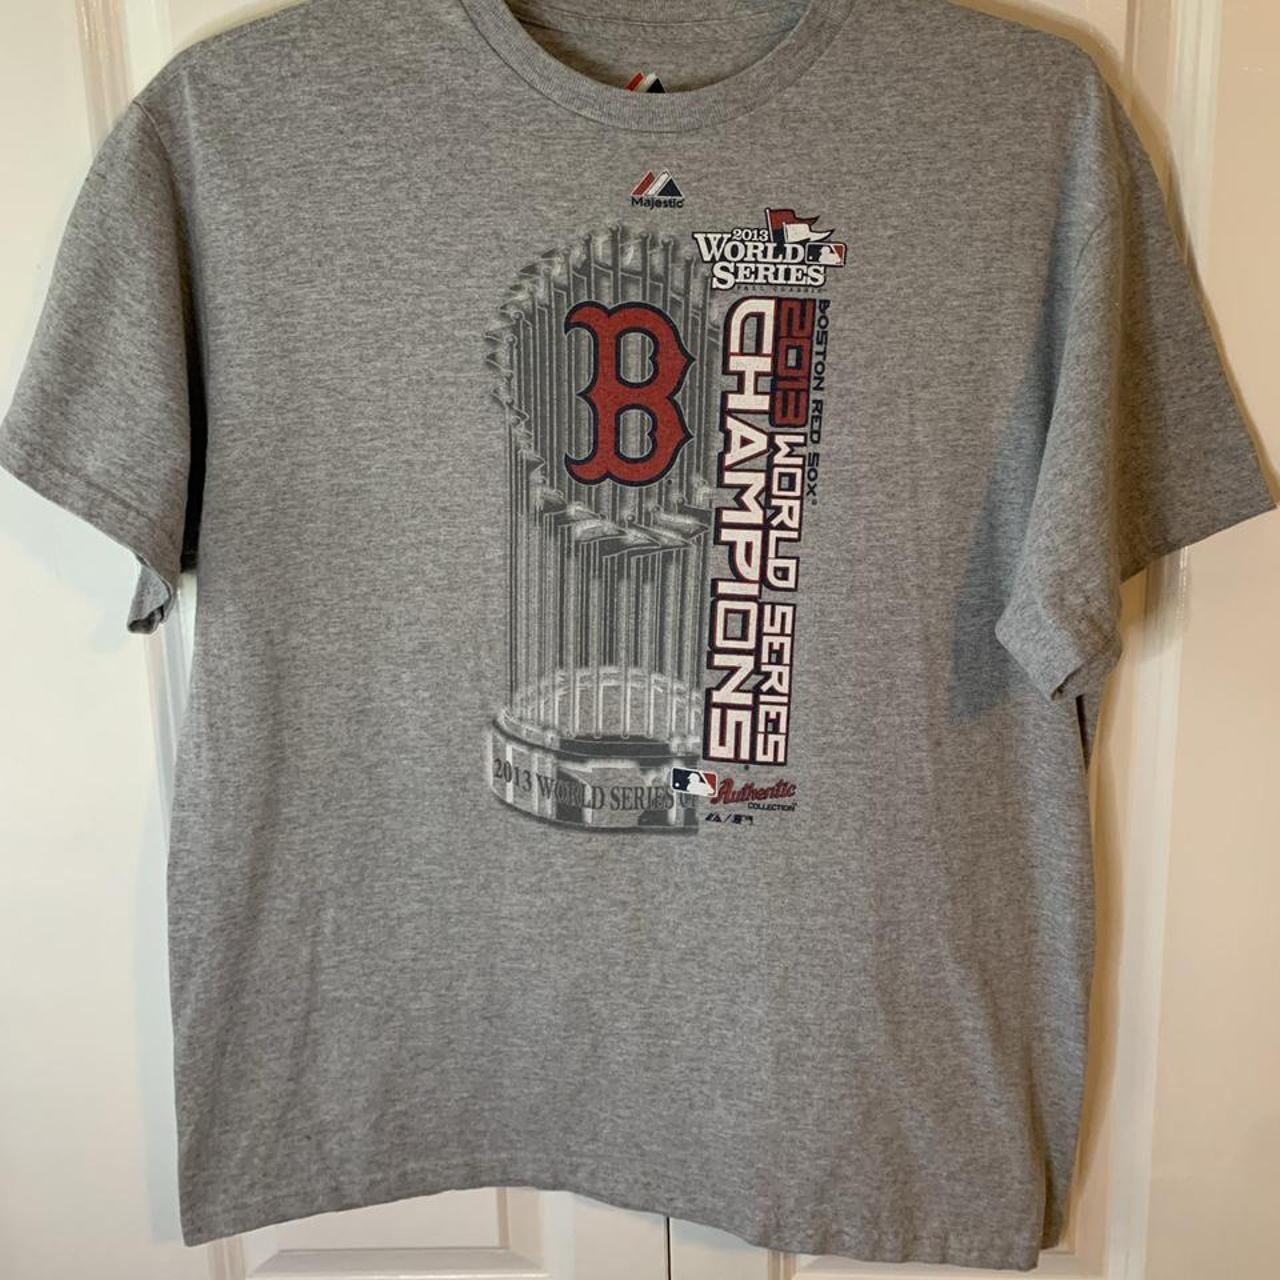 2013 Majestic Boston Red Sox World Series Champions - Depop